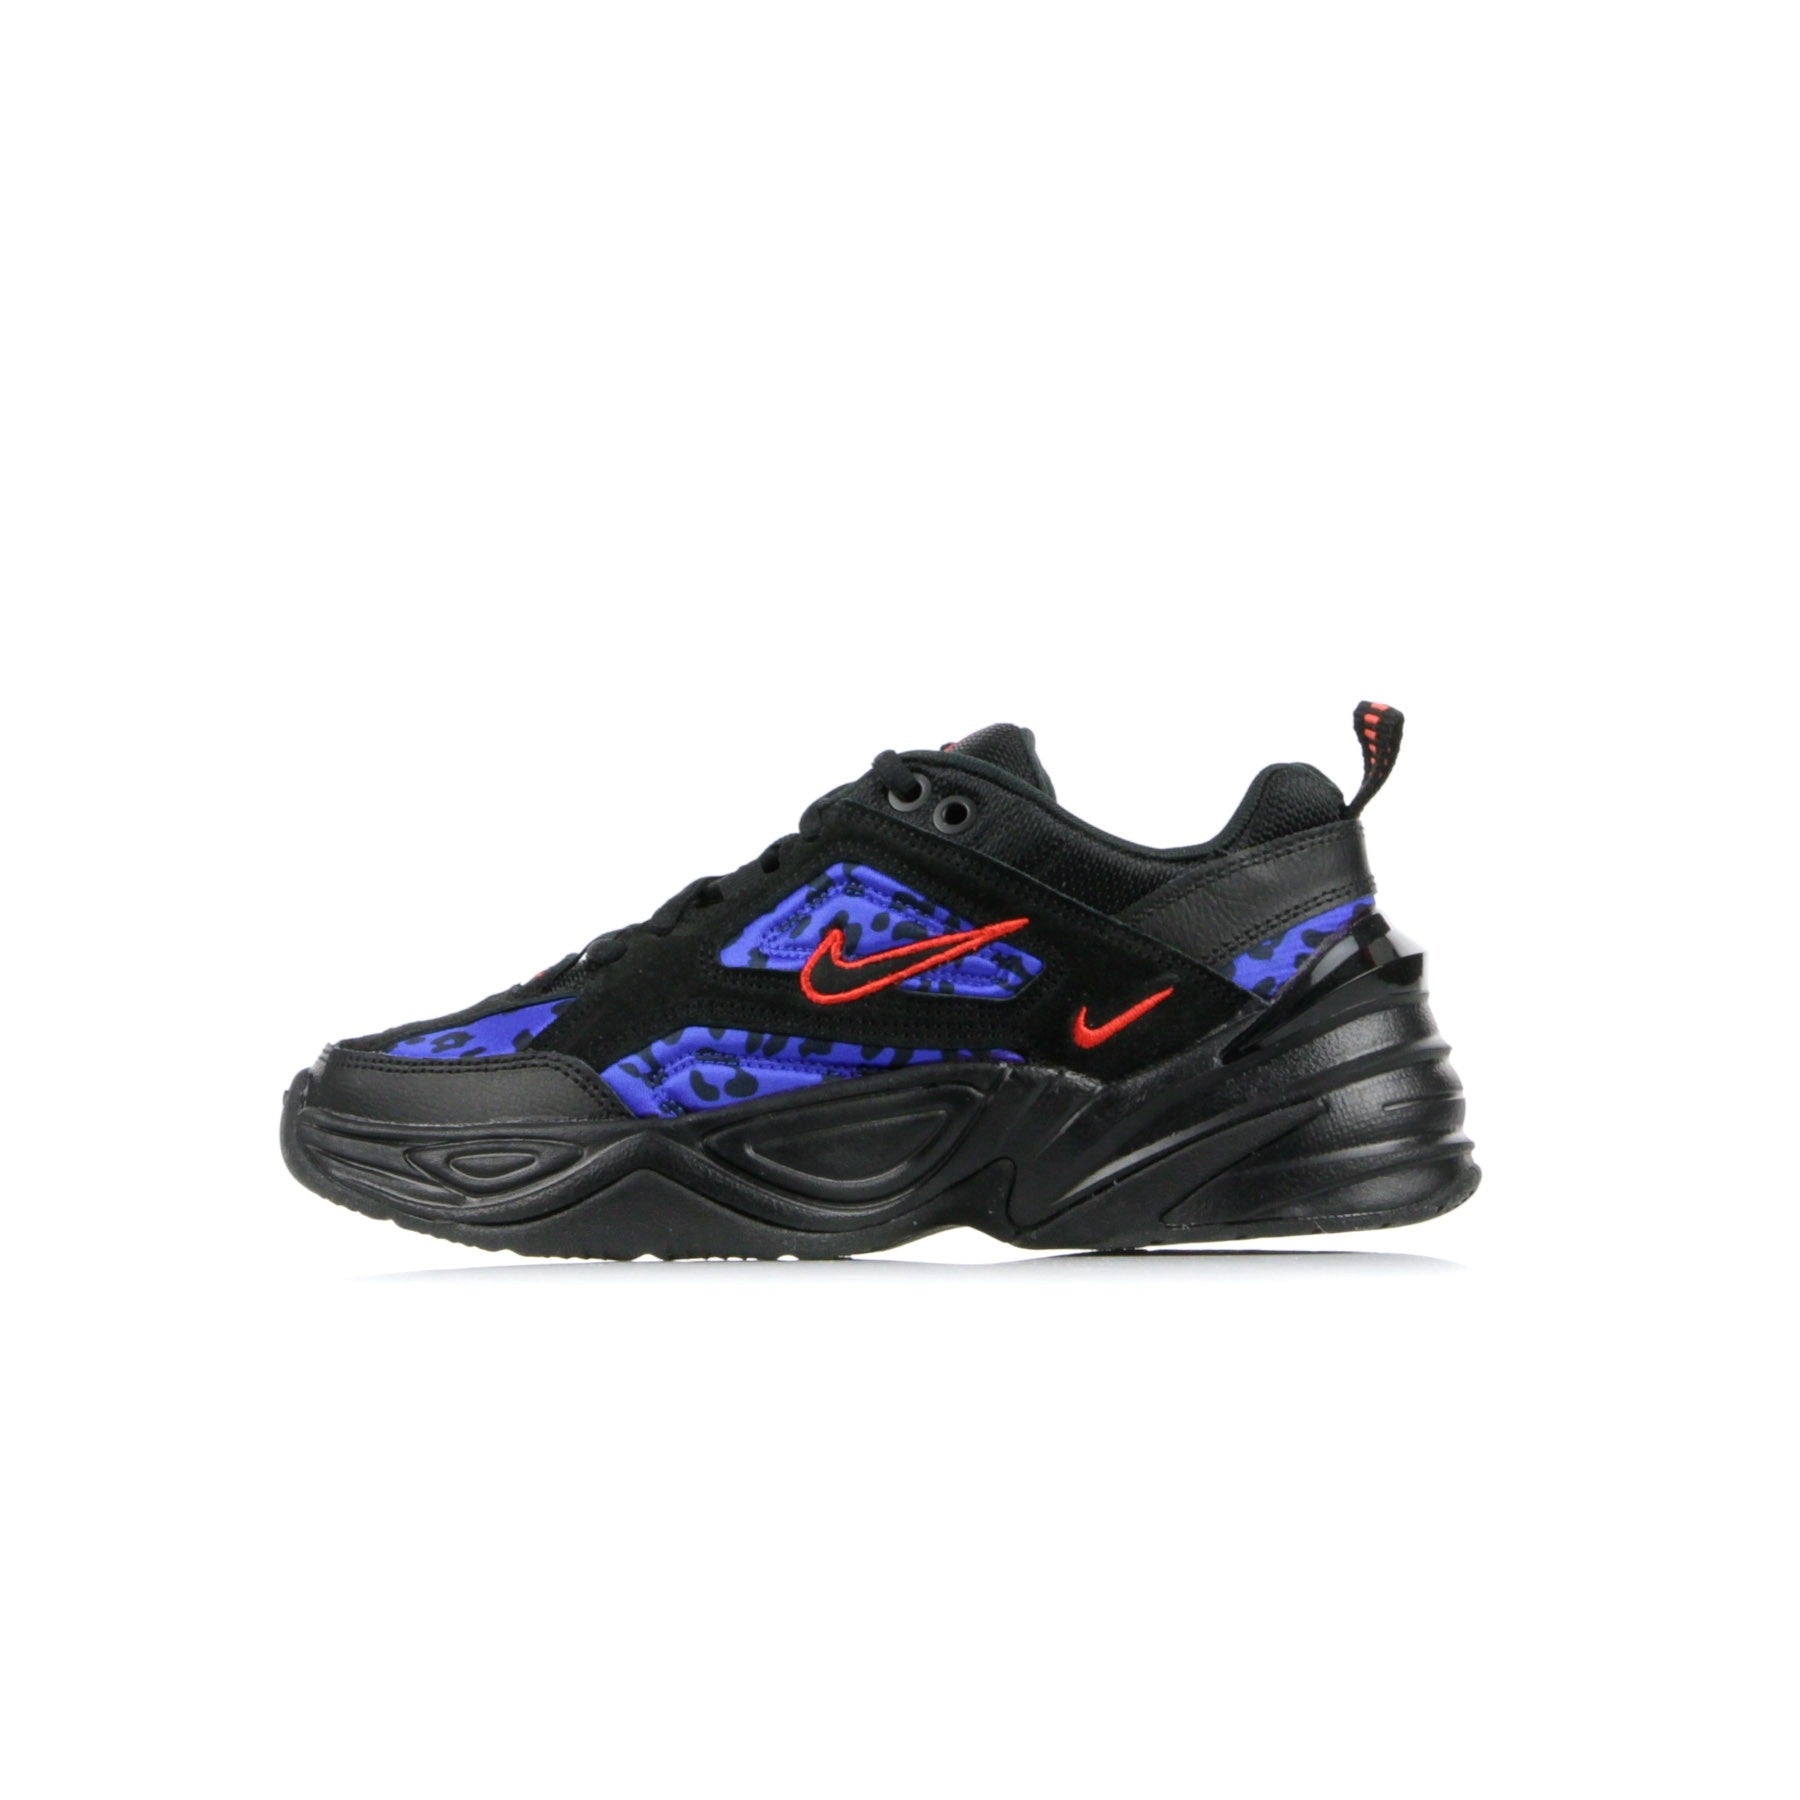 Women's Low Shoe W Nike M2kn Tekno Black/habanero Red/racer Blue